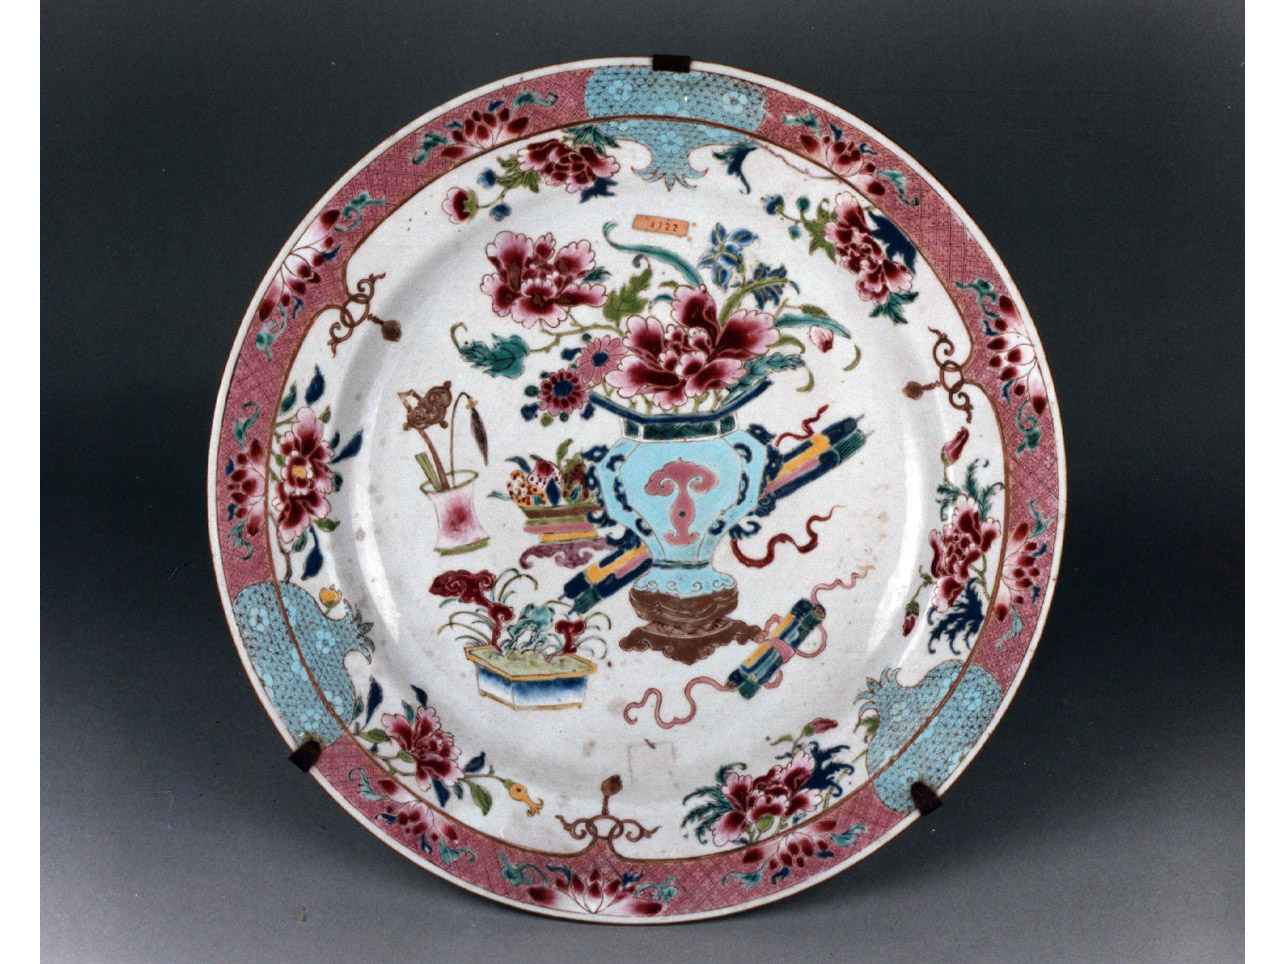 motivi decorativi vegetali (piatto) - manifattura cinese (sec. XVIII)